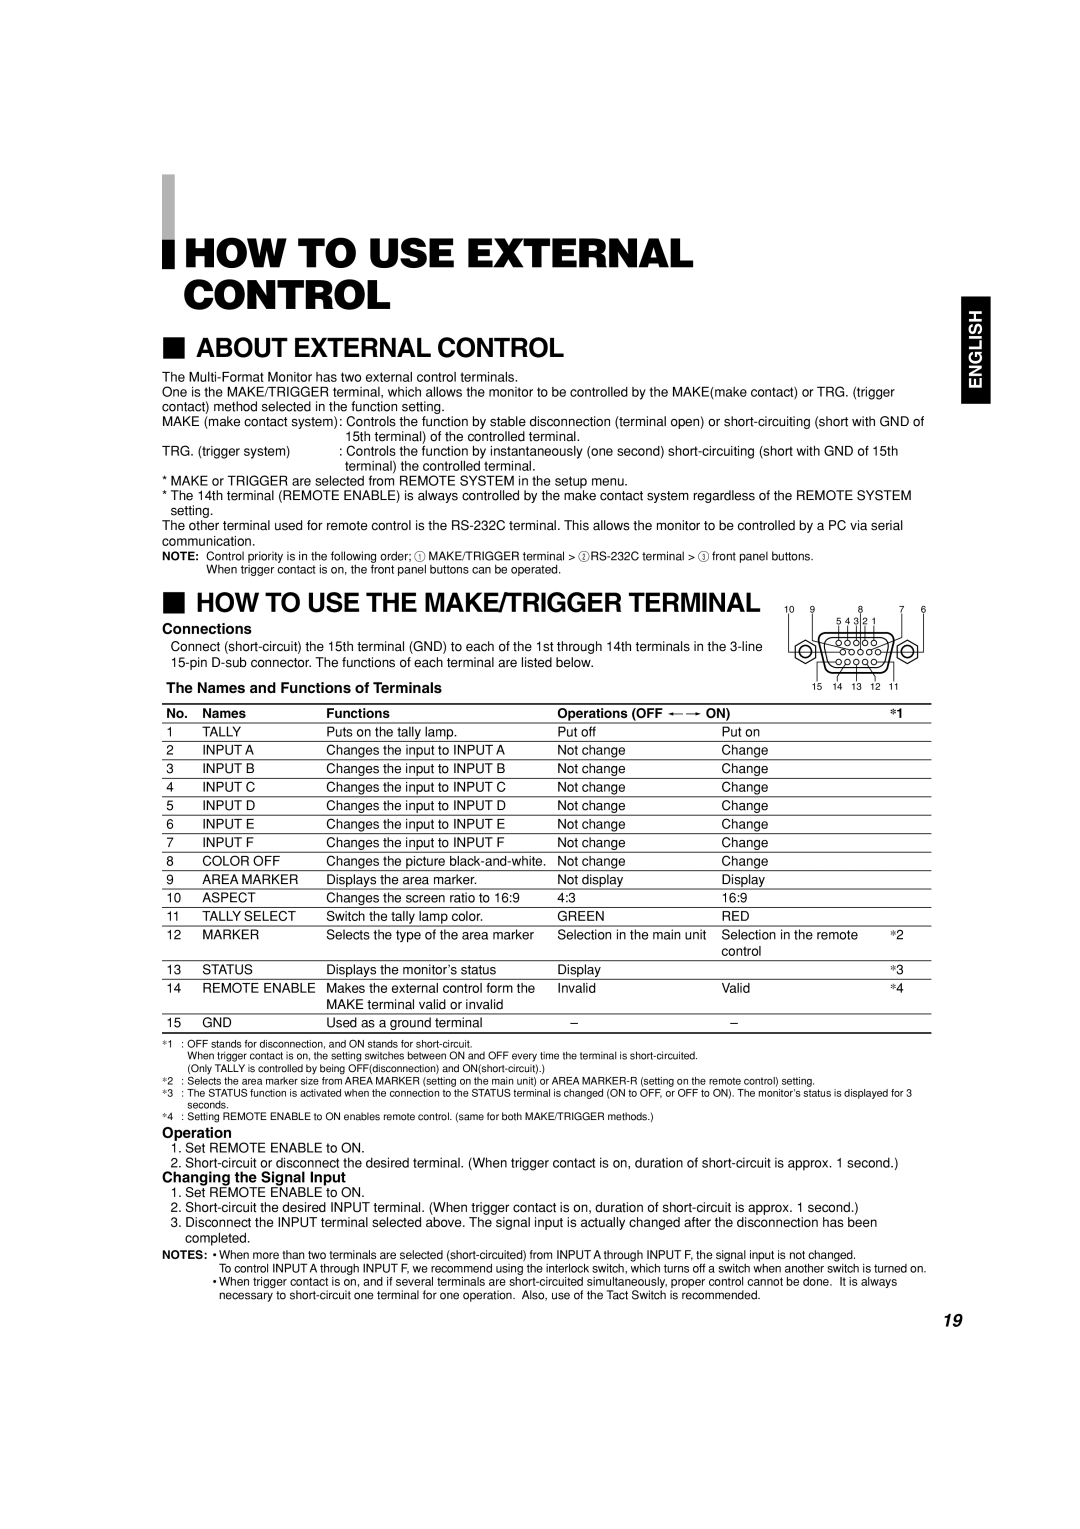 Panasonic BT-H1700AE How To Use External Control,  About External Control,  HOW TO USE THE MAKE/TRIGGER TERMINAL 10 